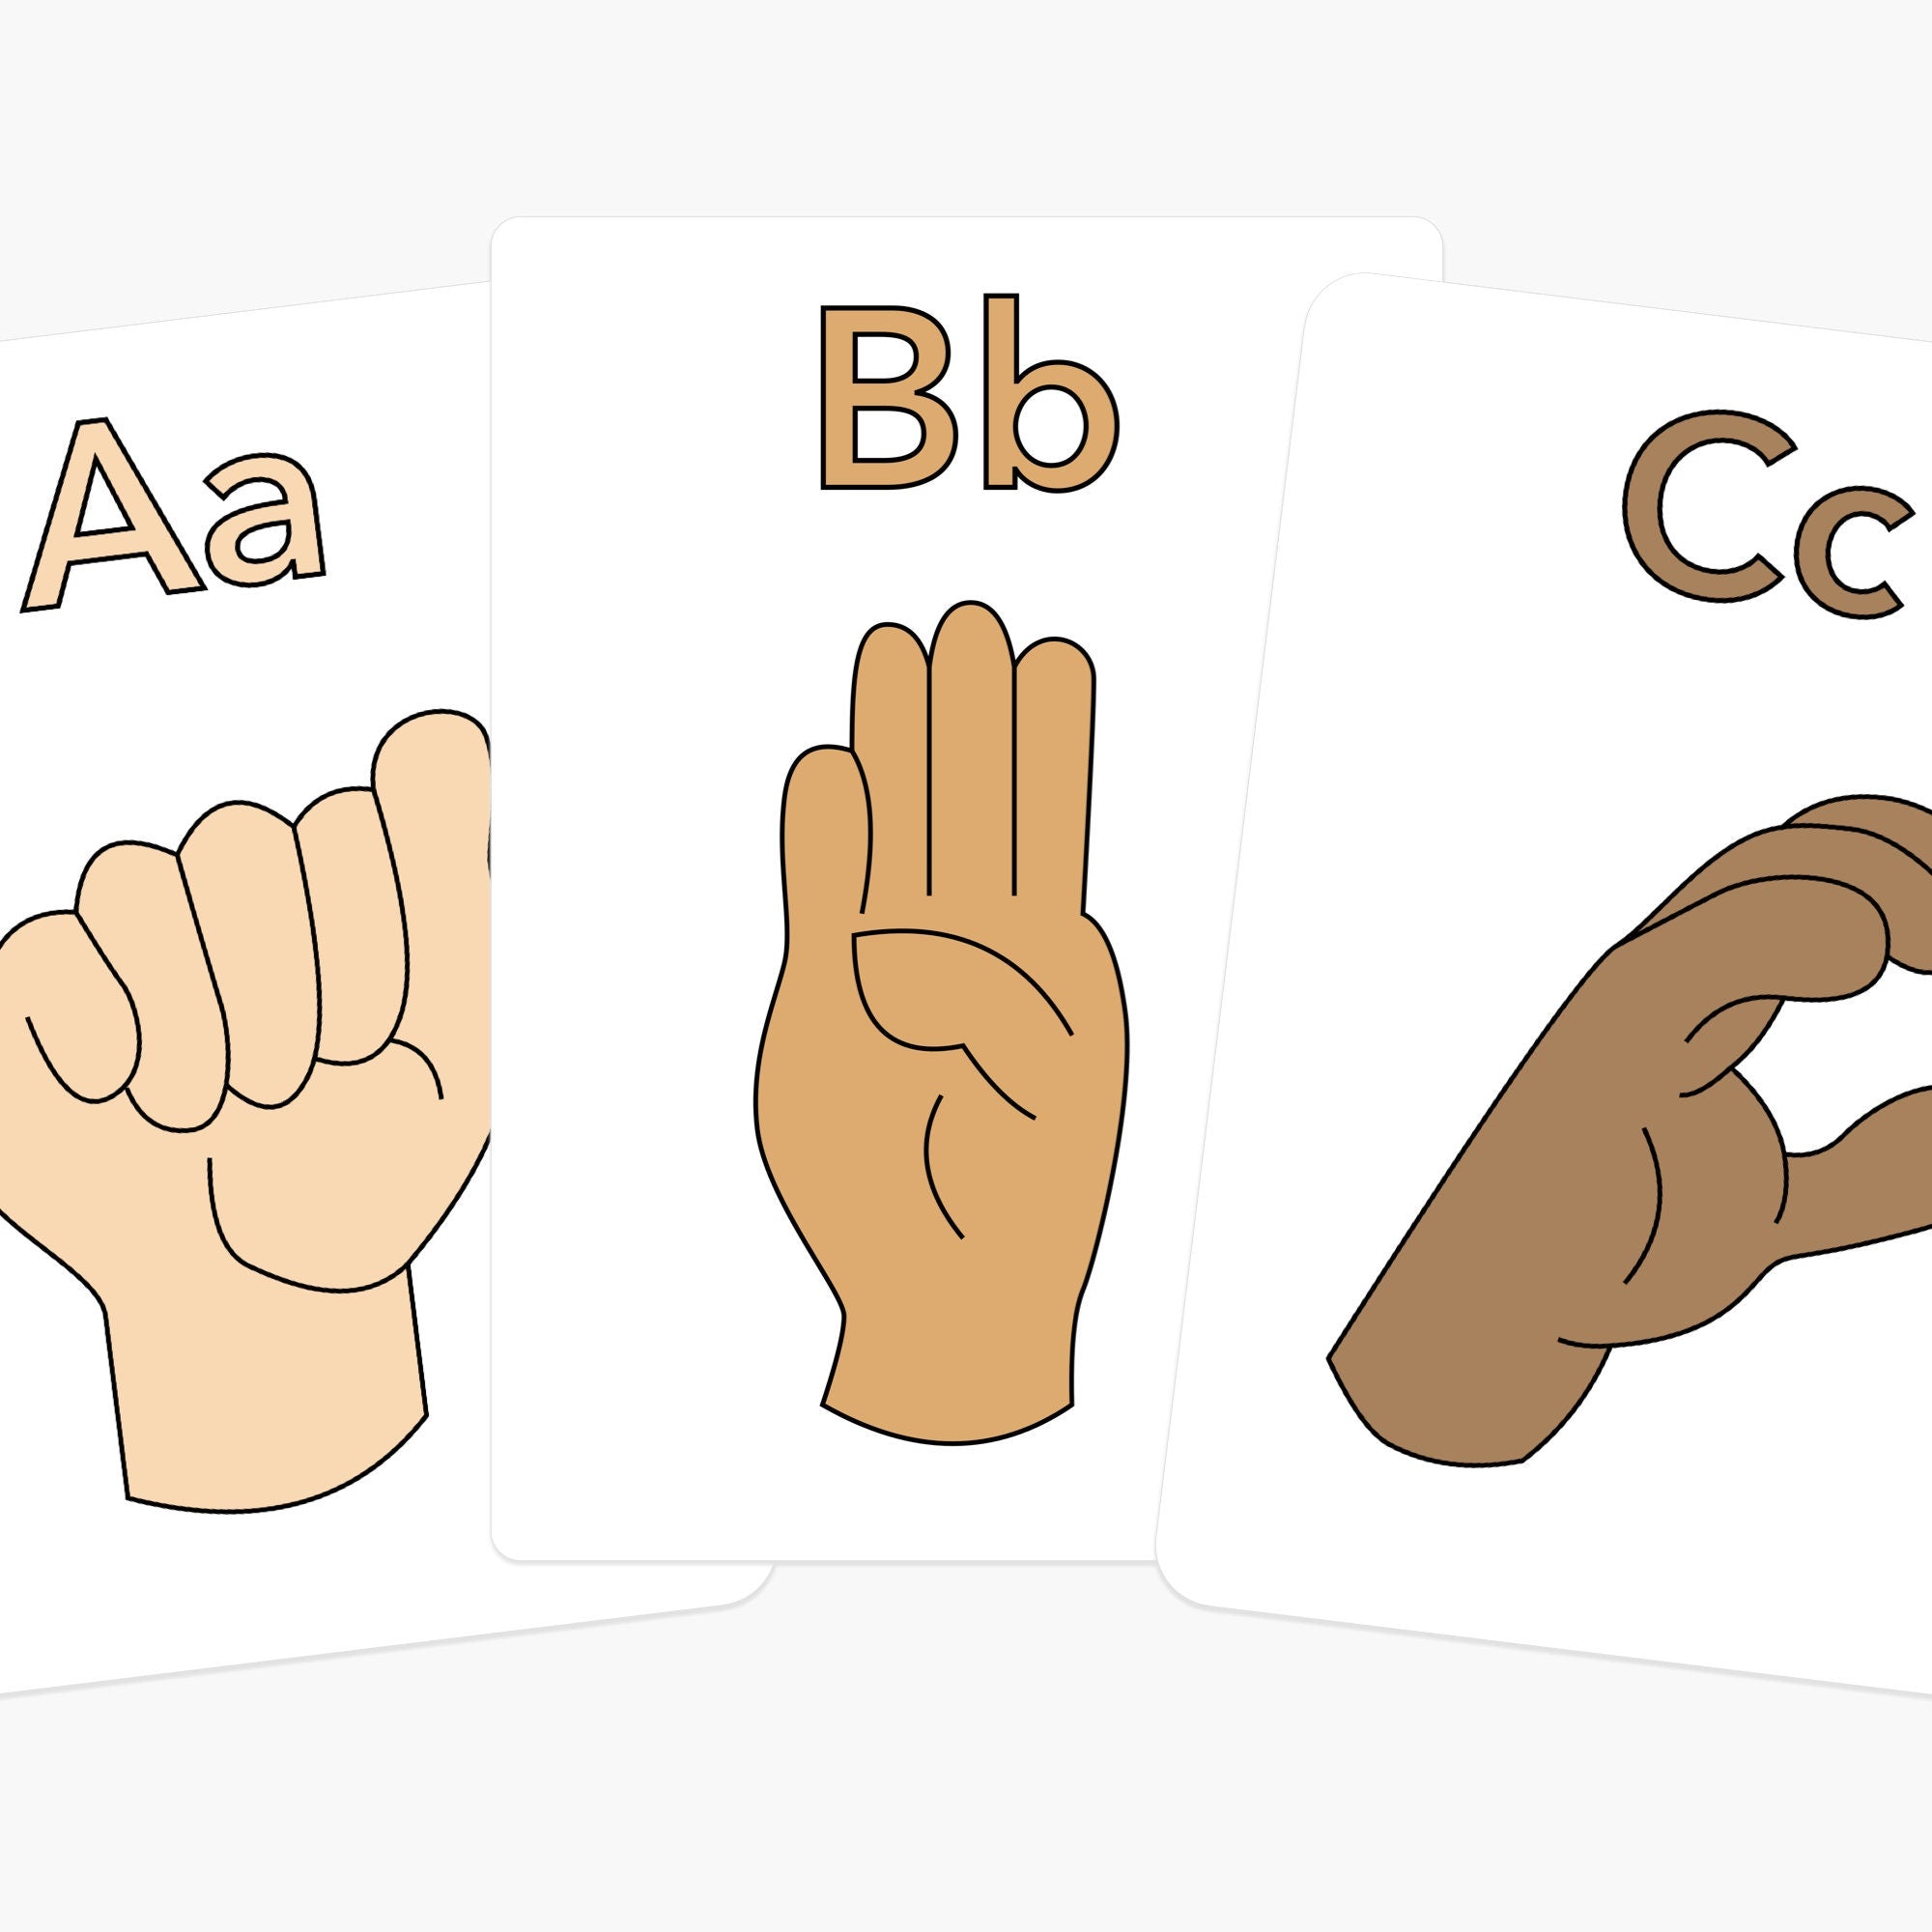 sign language alphabet printable flash cards